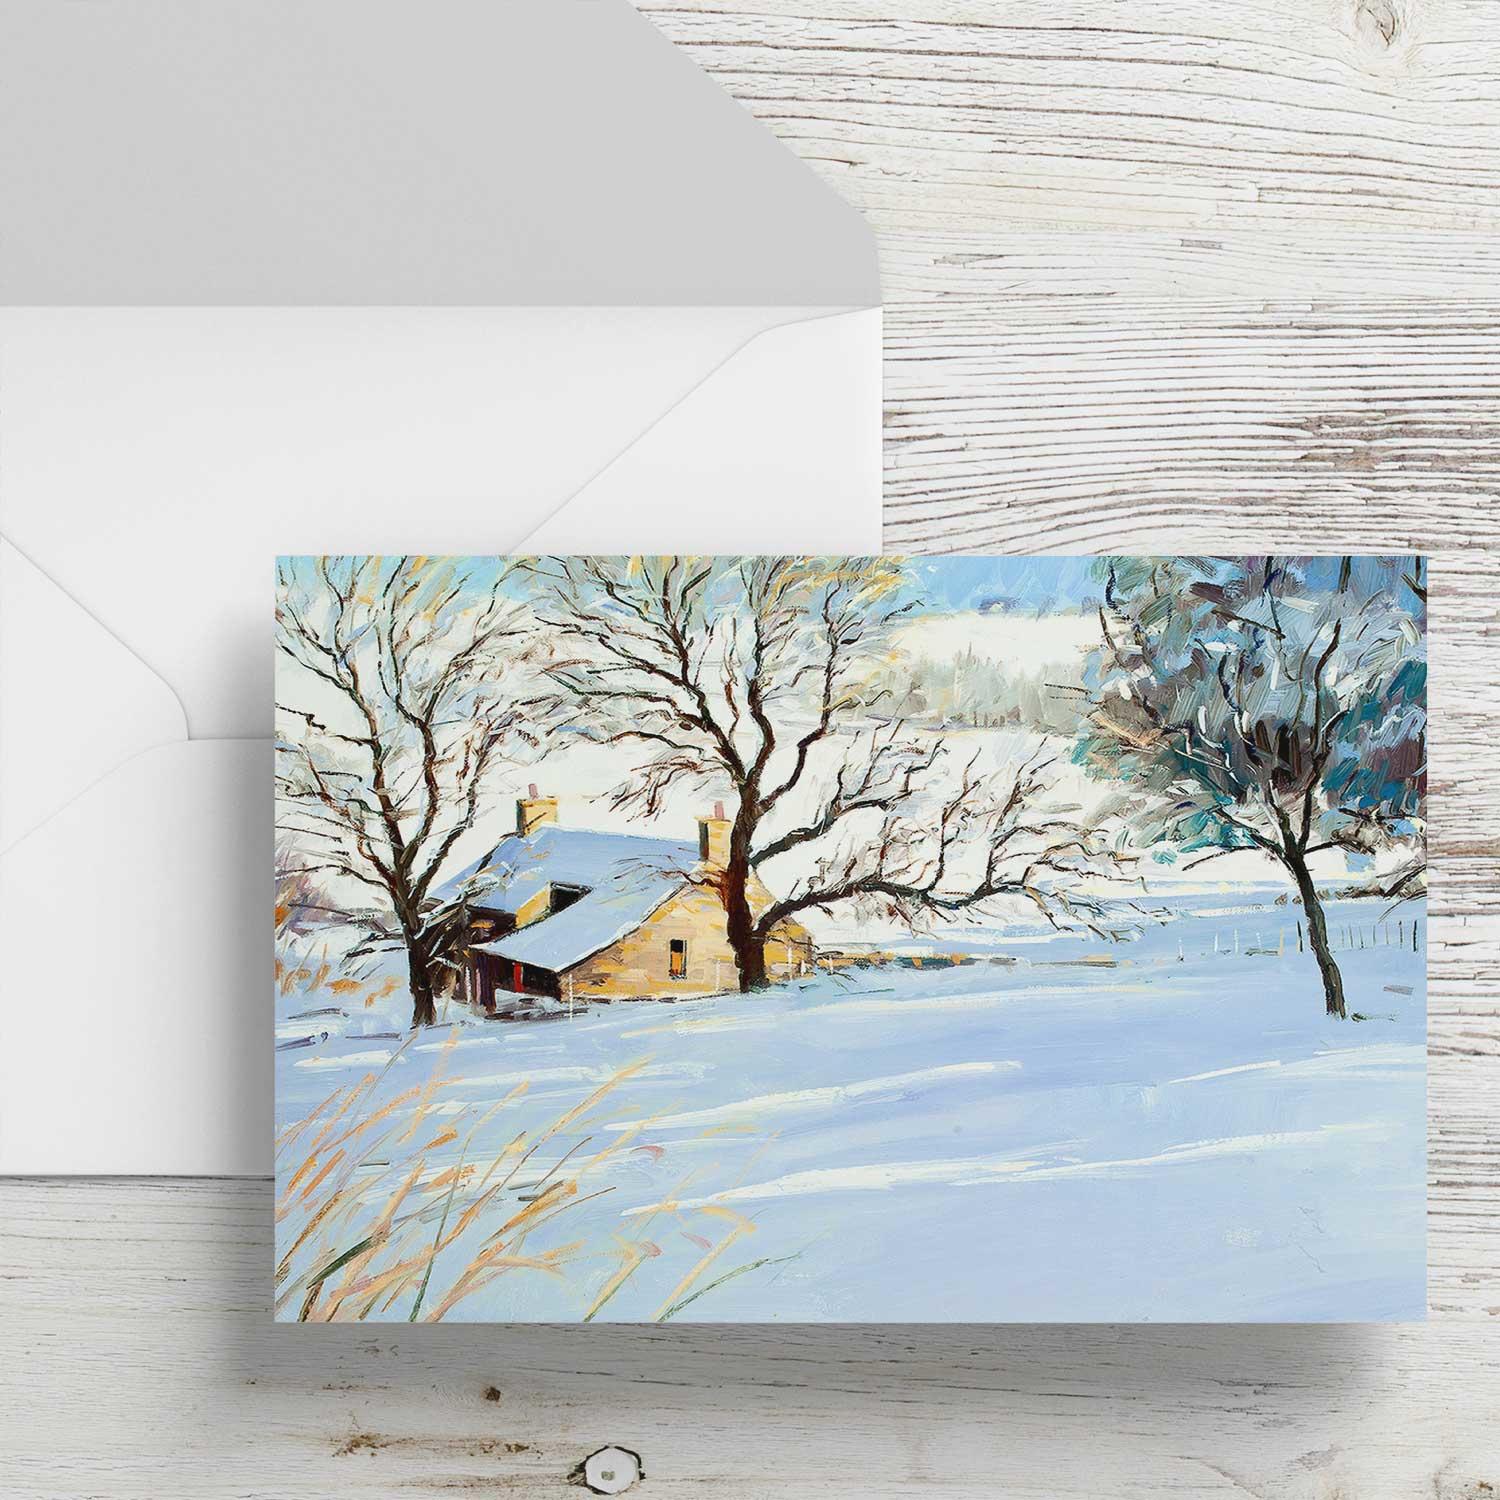 Winter Light Greeting Card from an original painting by artist Robert Kelsey